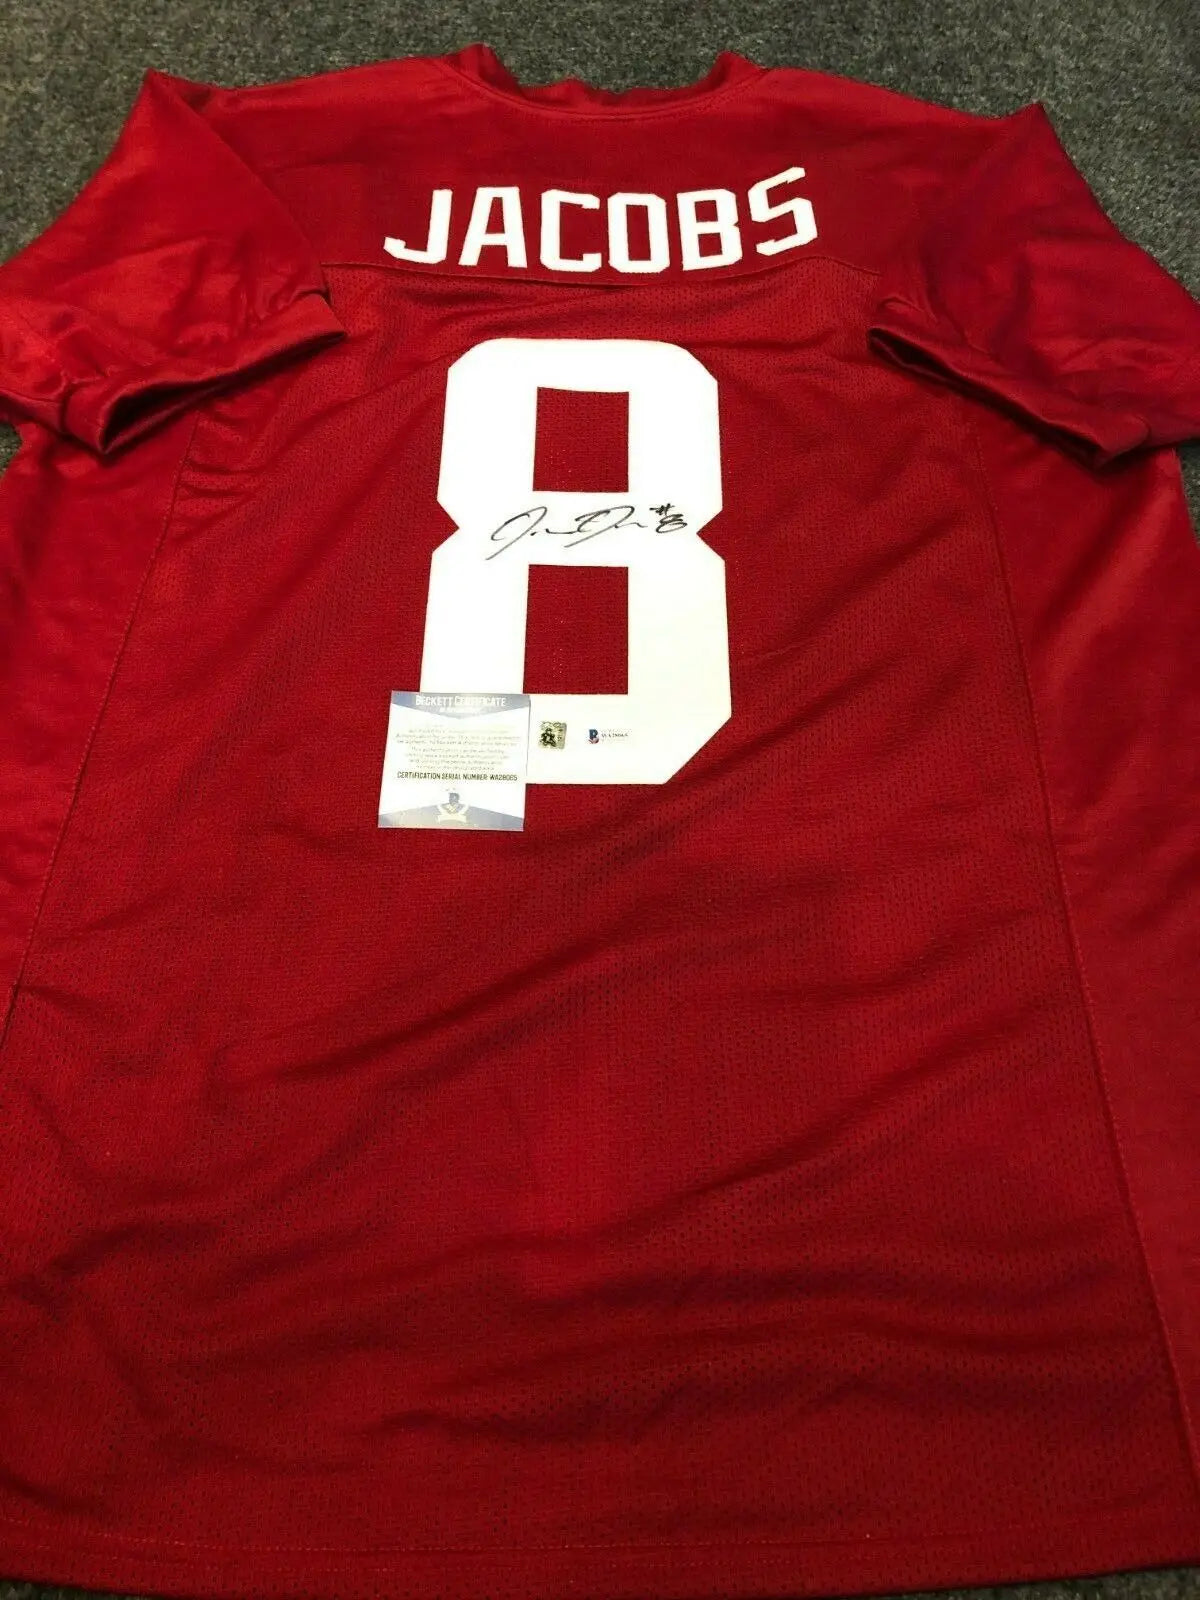 Alabama Crimson Tide Josh Jacobs Autographed Signed Jersey Beckett